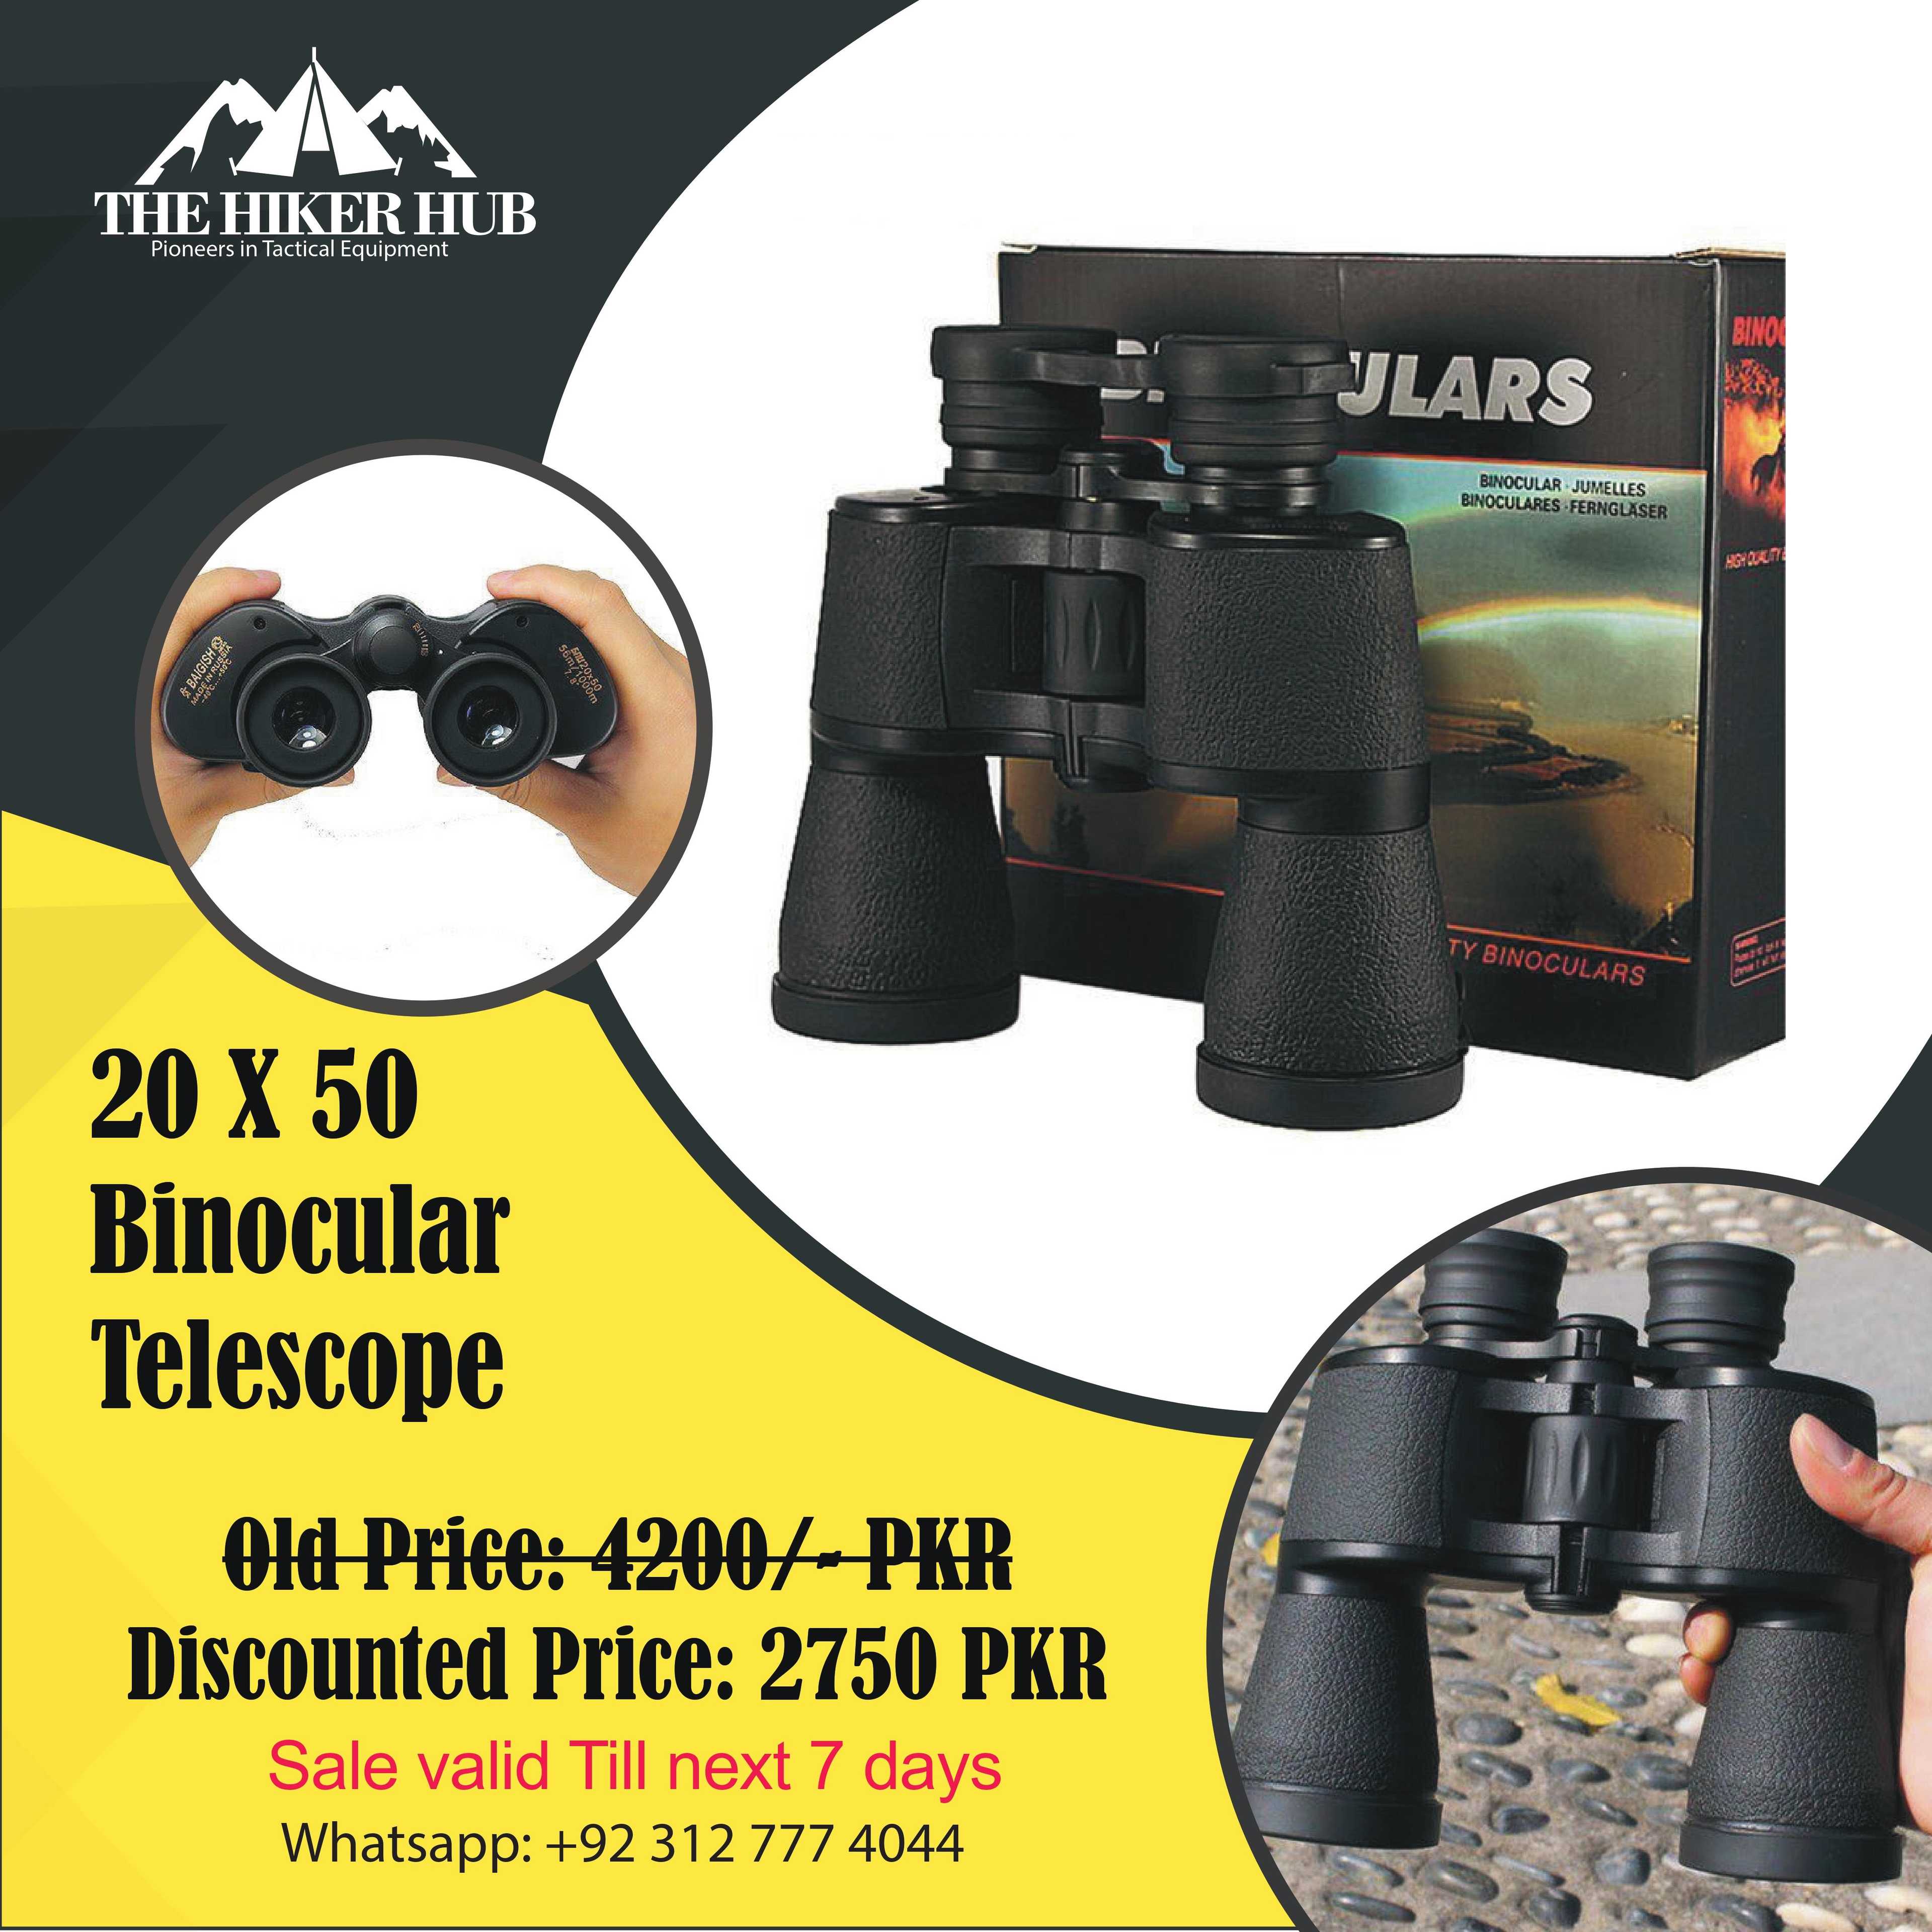 08 x 40 Hd Powerful Military Binocular - Black